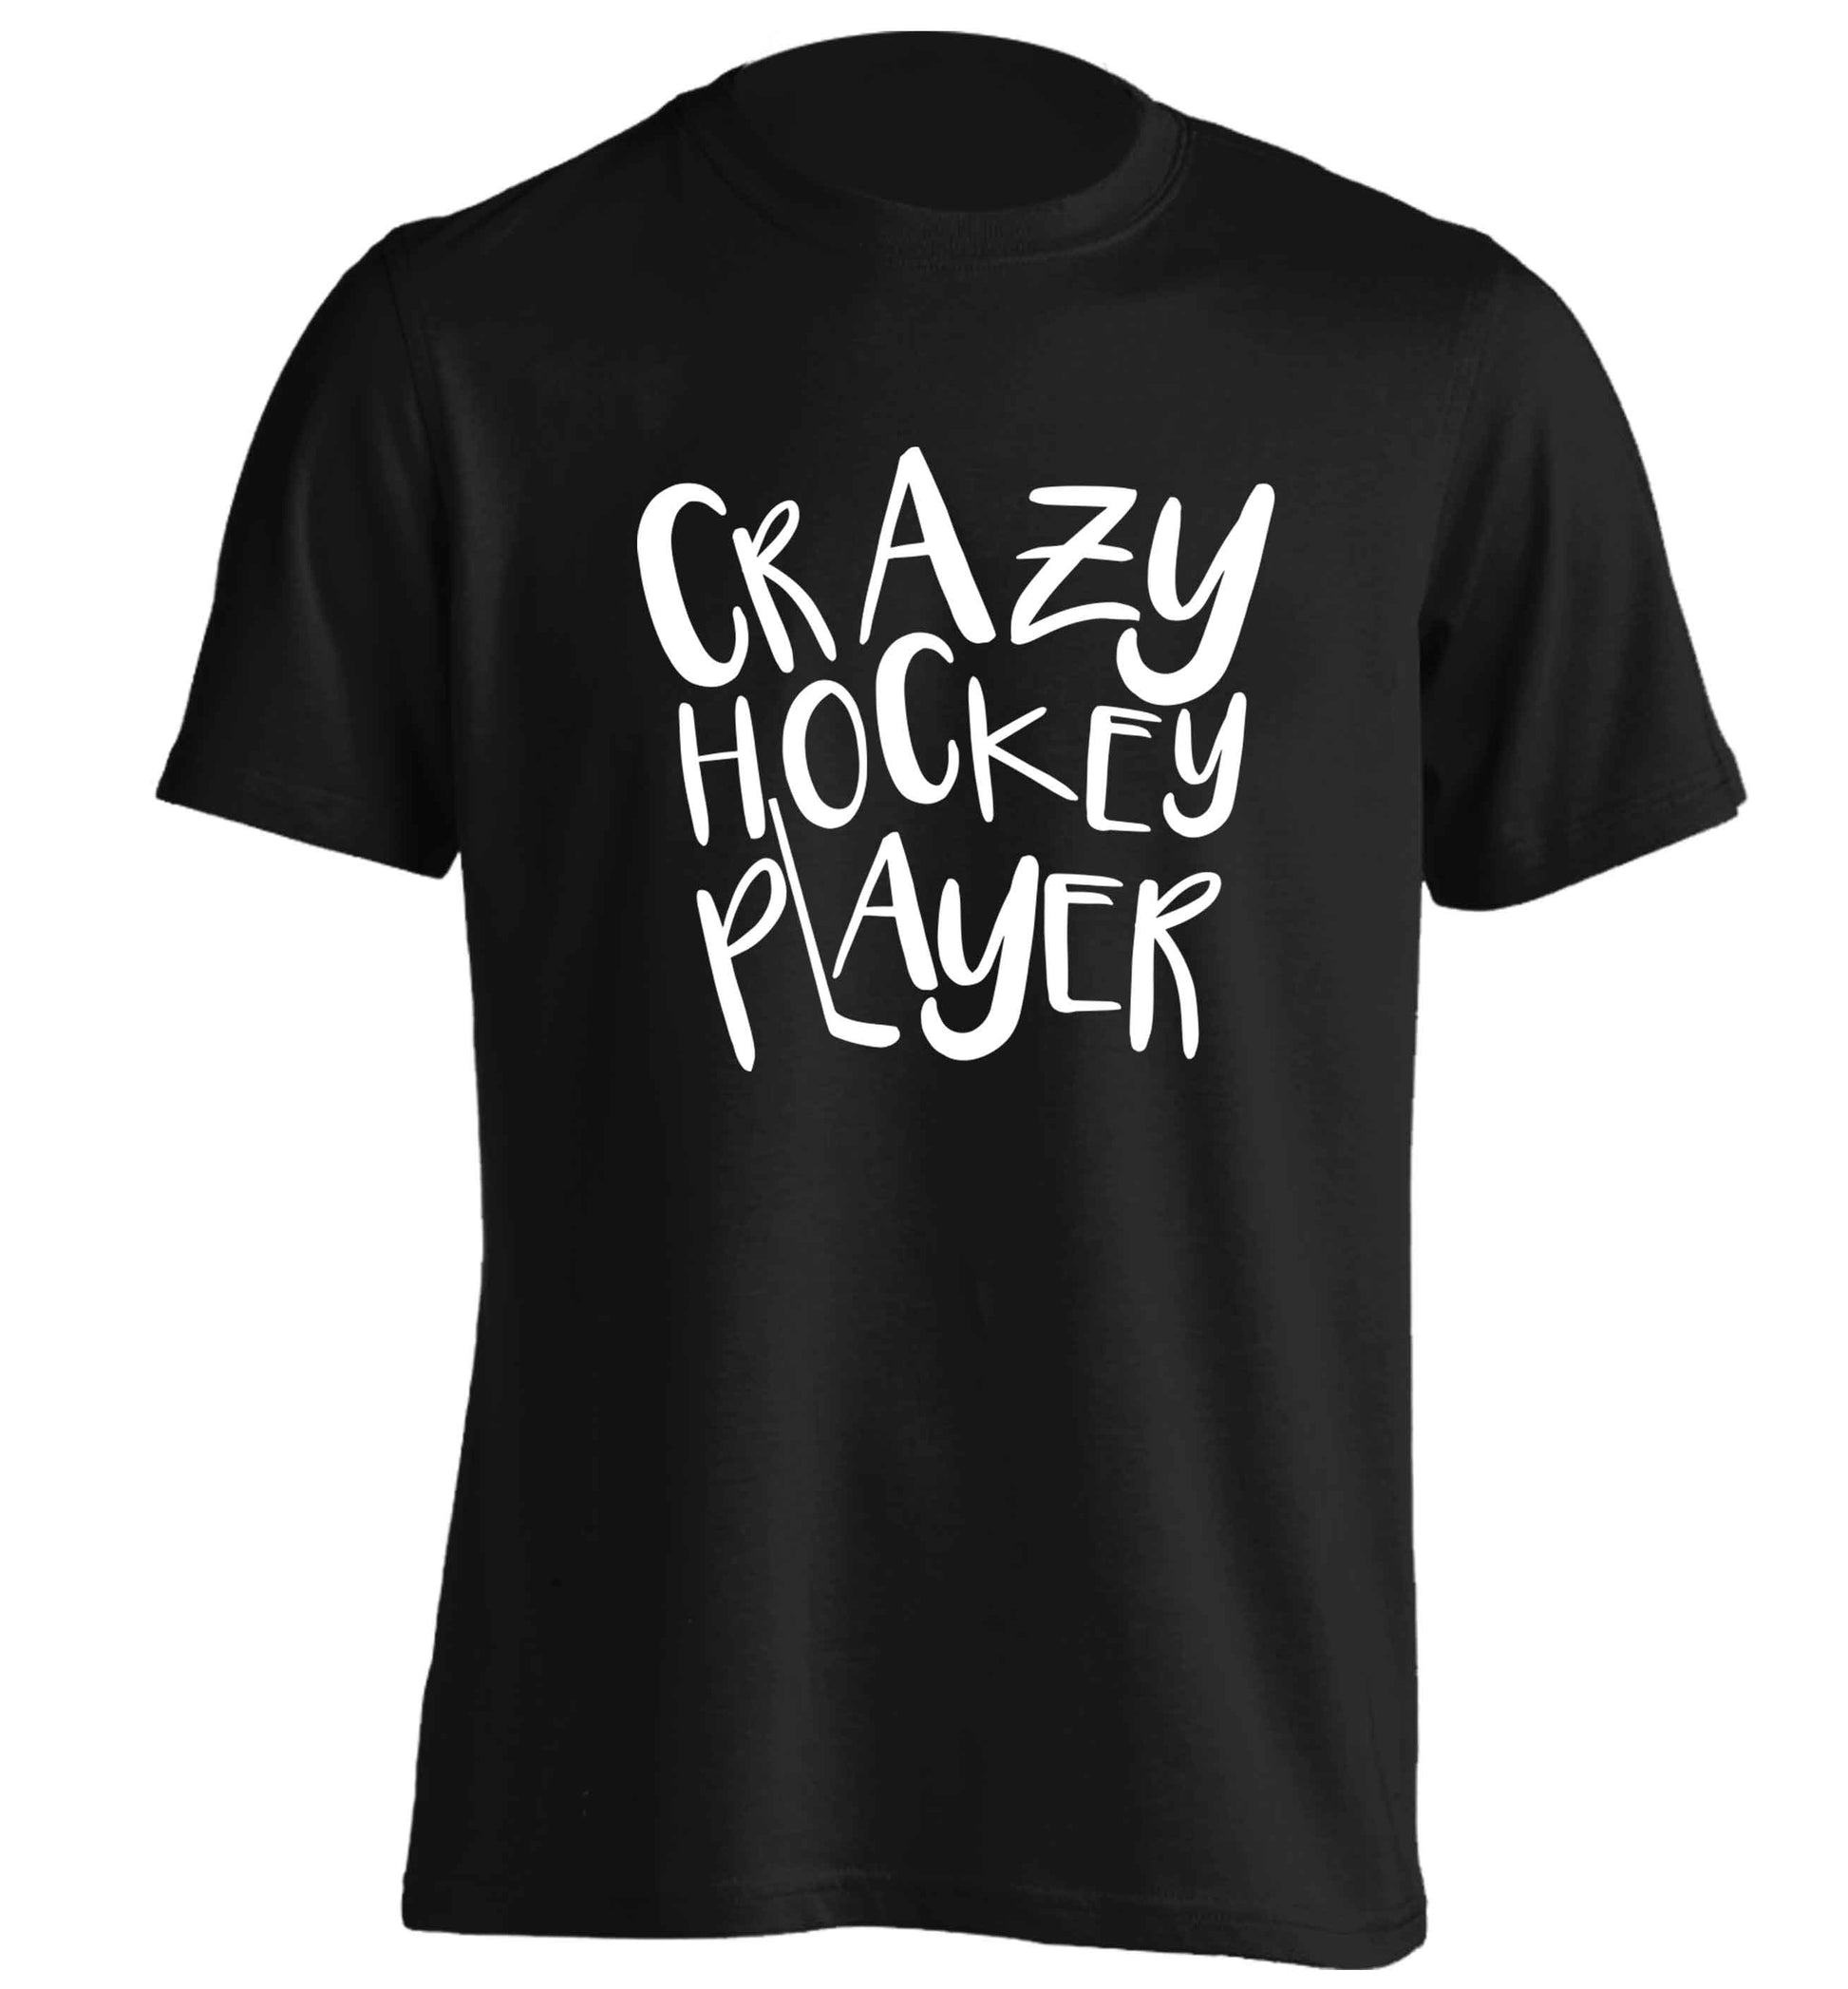 Crazy hockey player adults unisex black Tshirt 2XL